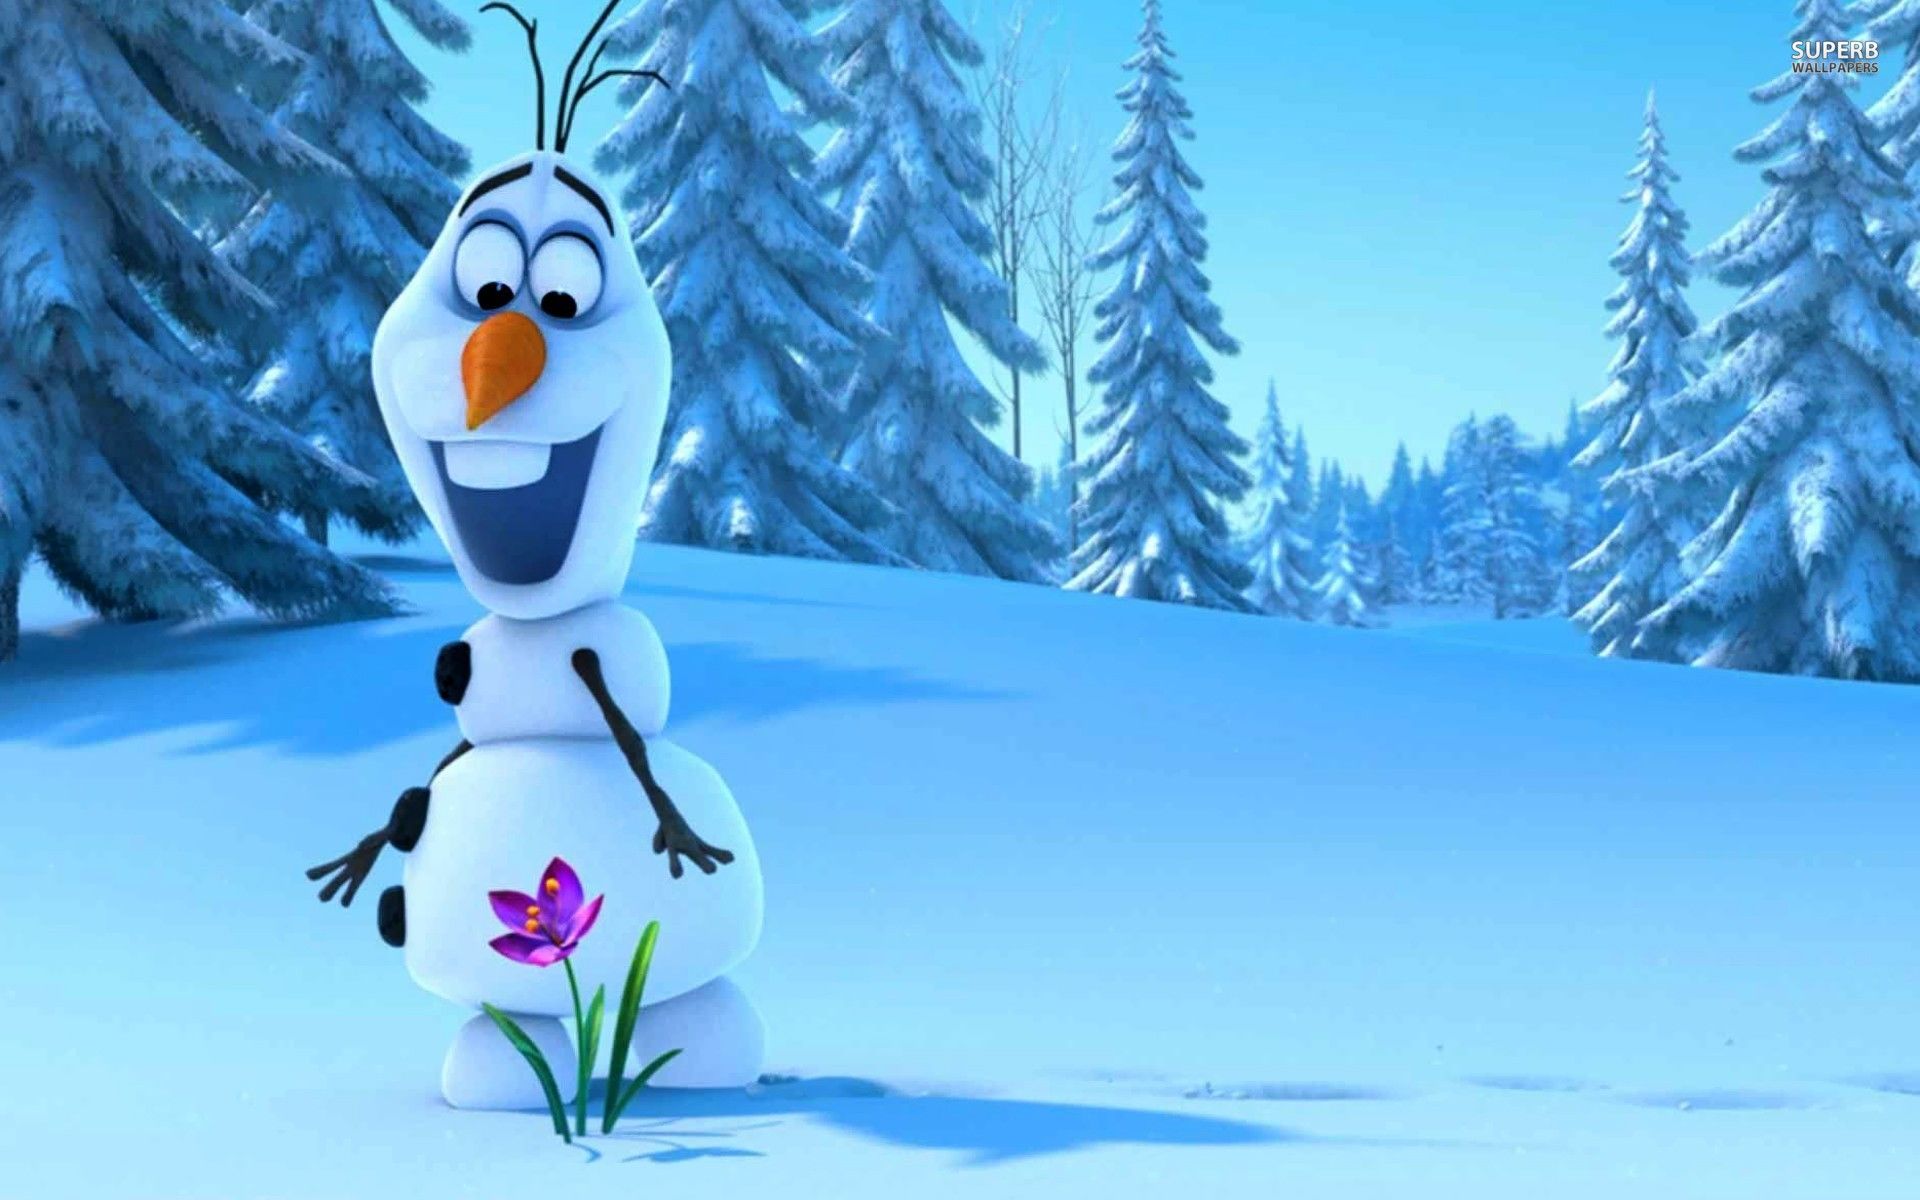 11 Kata Mutiara Dari Film Frozen Yang Akan Melelehkan Hatimu IDN